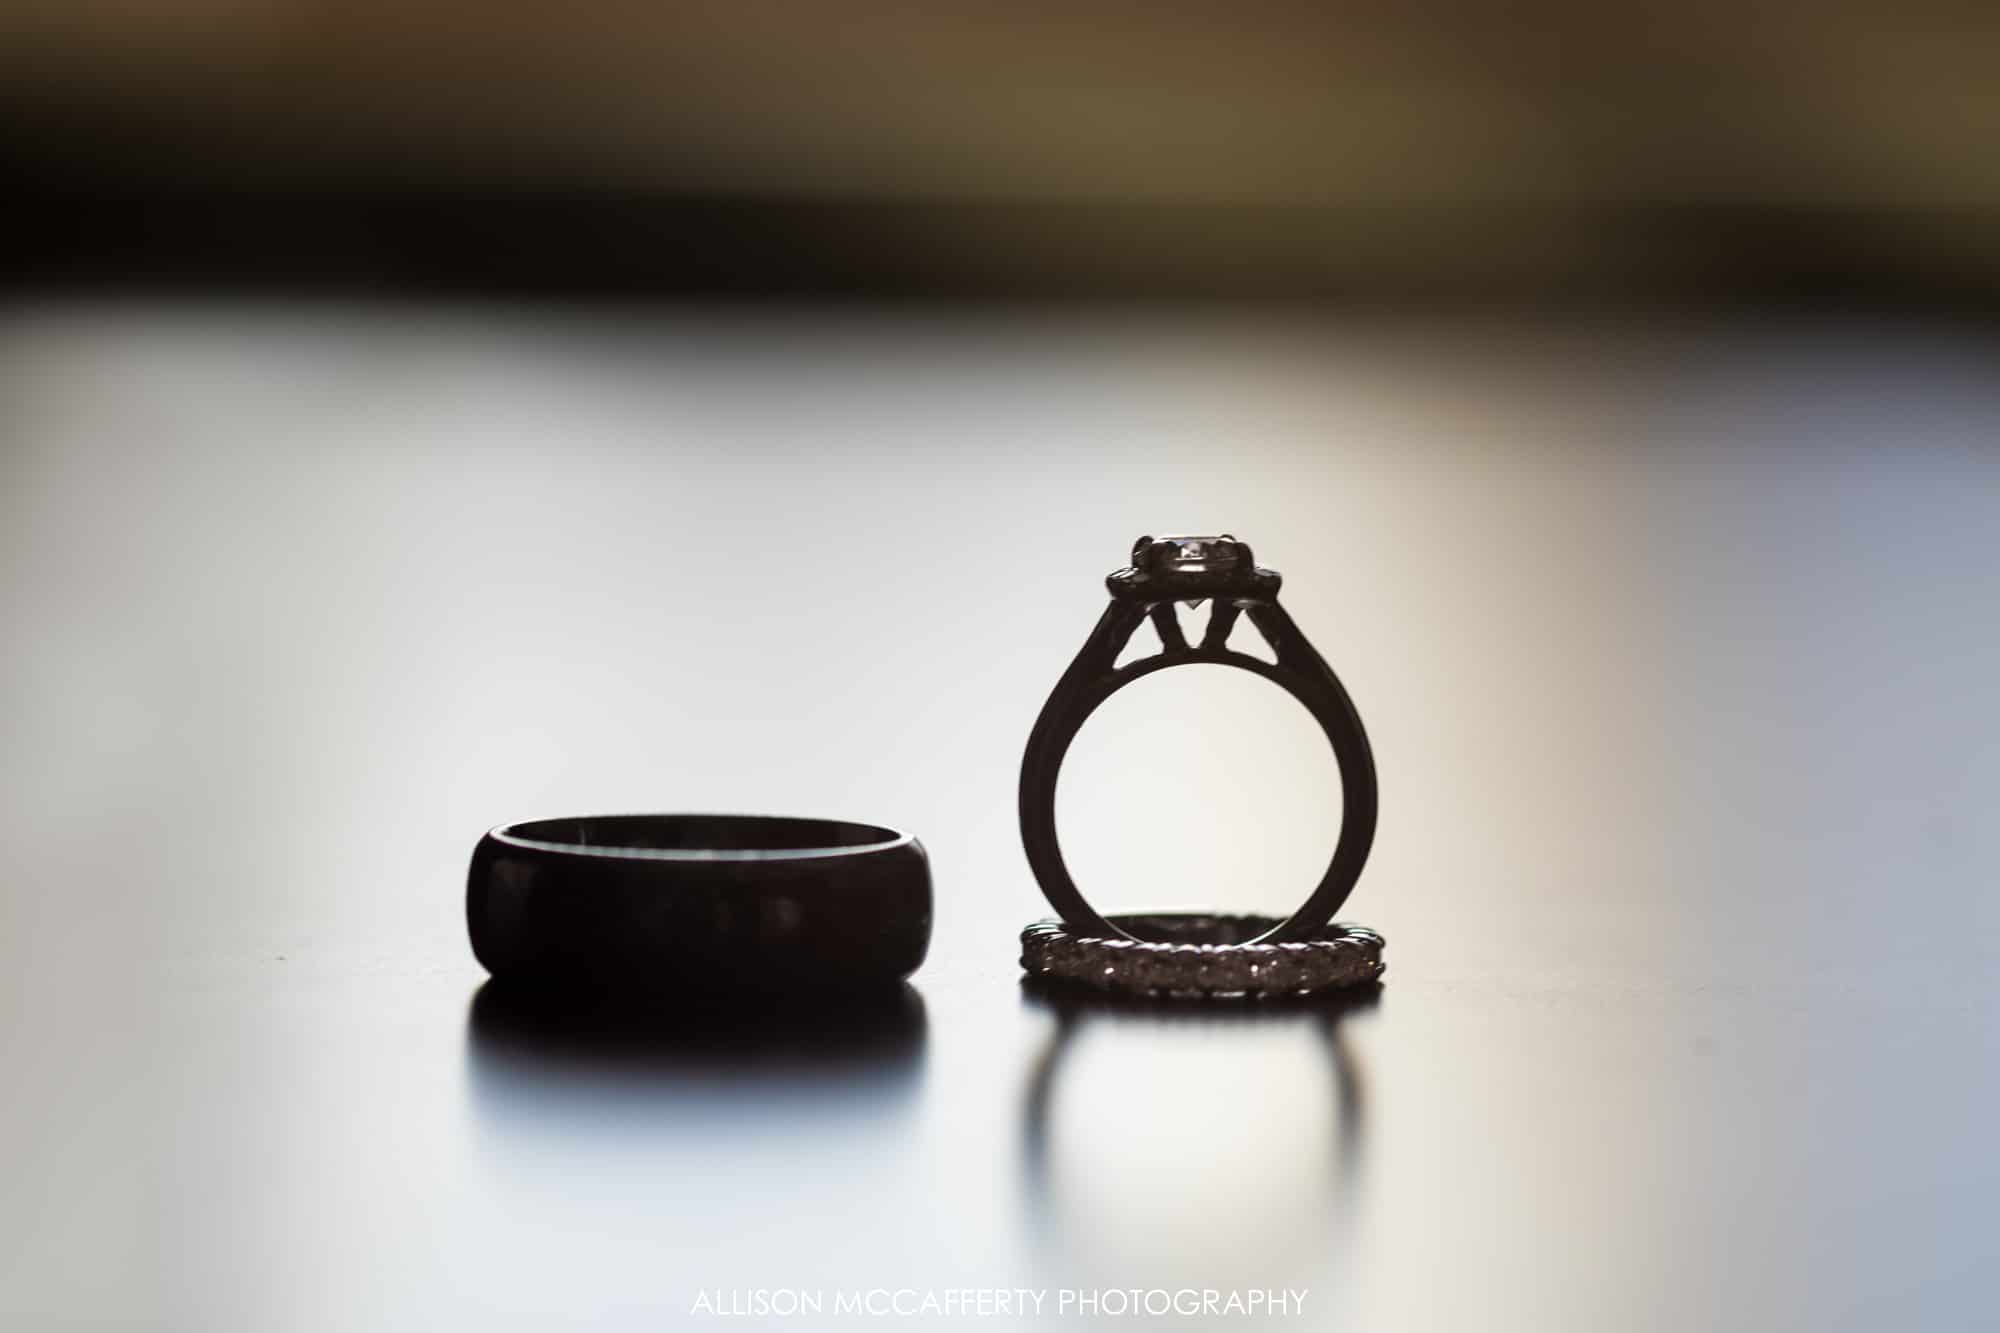 Silhouette of wedding rings